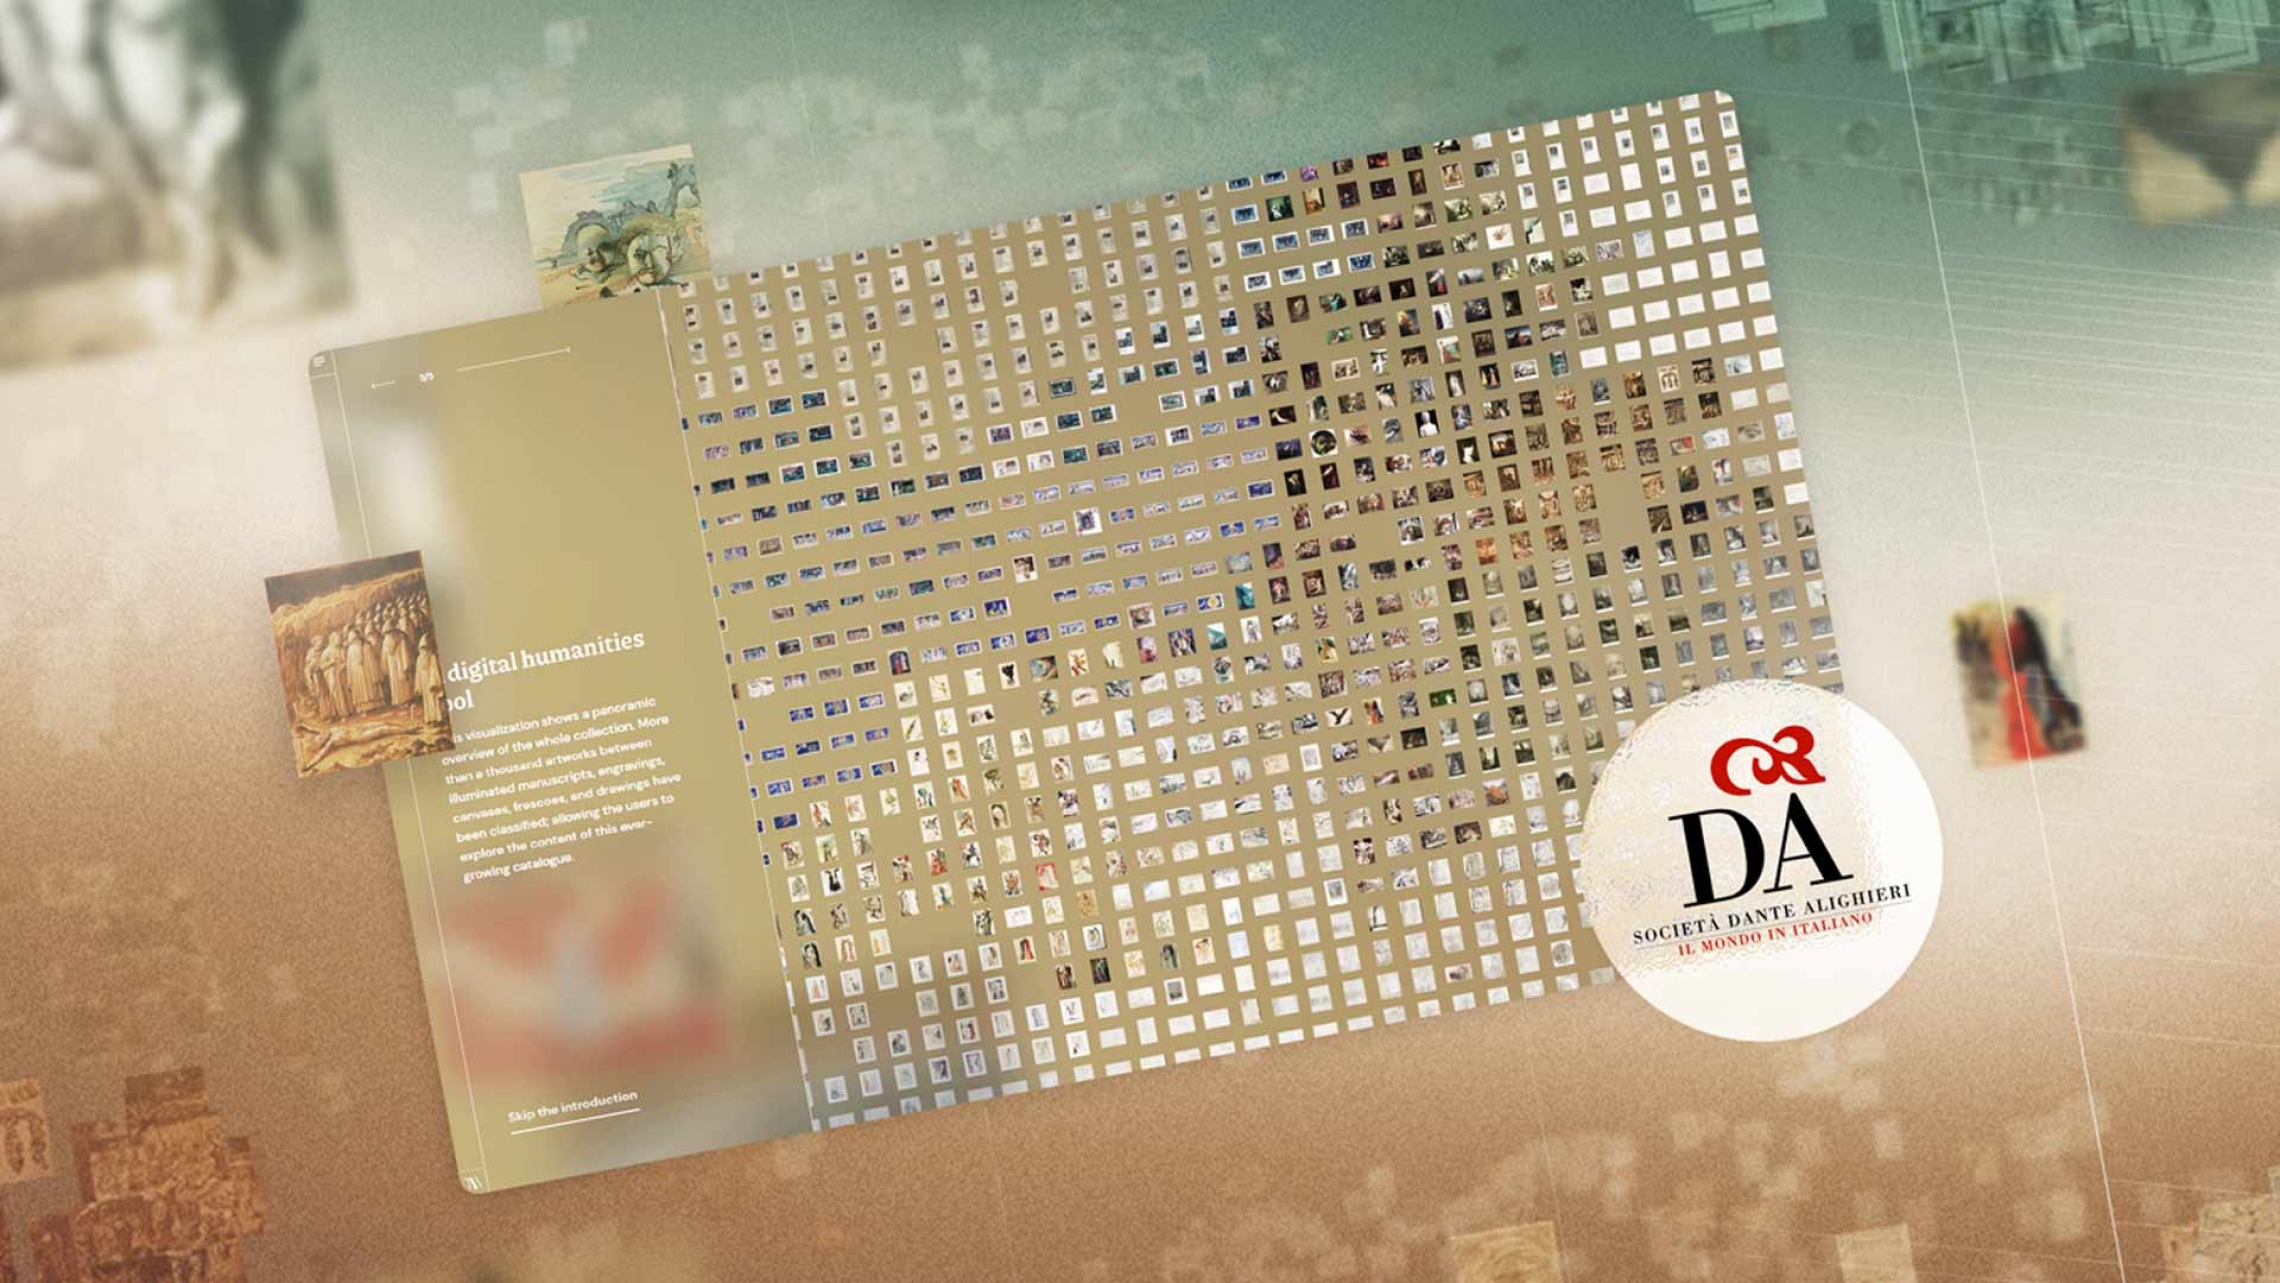 Dante Alighieri Society patronage for The Visual Agency's DivineComedy.digital